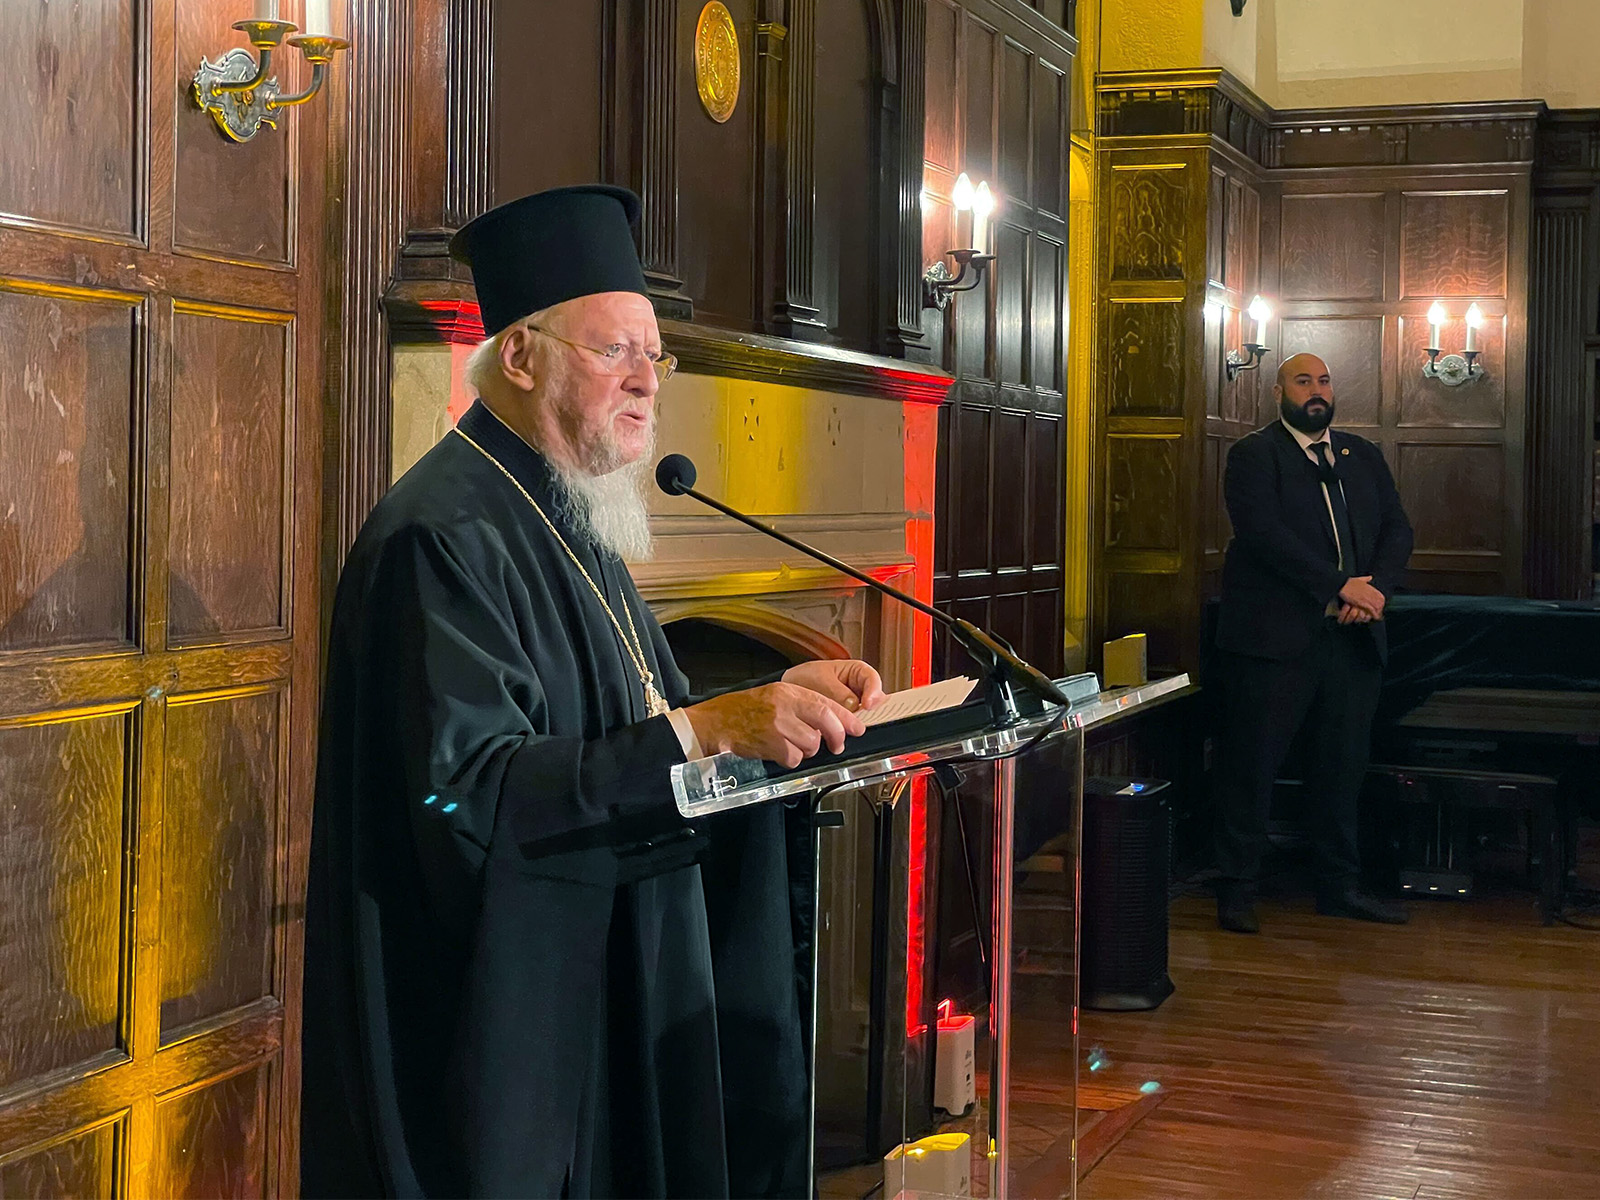 Ecumenical Patriarch Bartholomew I speaks at Georgetown University, Monday, Oct. 25, 2021, in Washington, D.C. RNS photo by Jack Jenkins